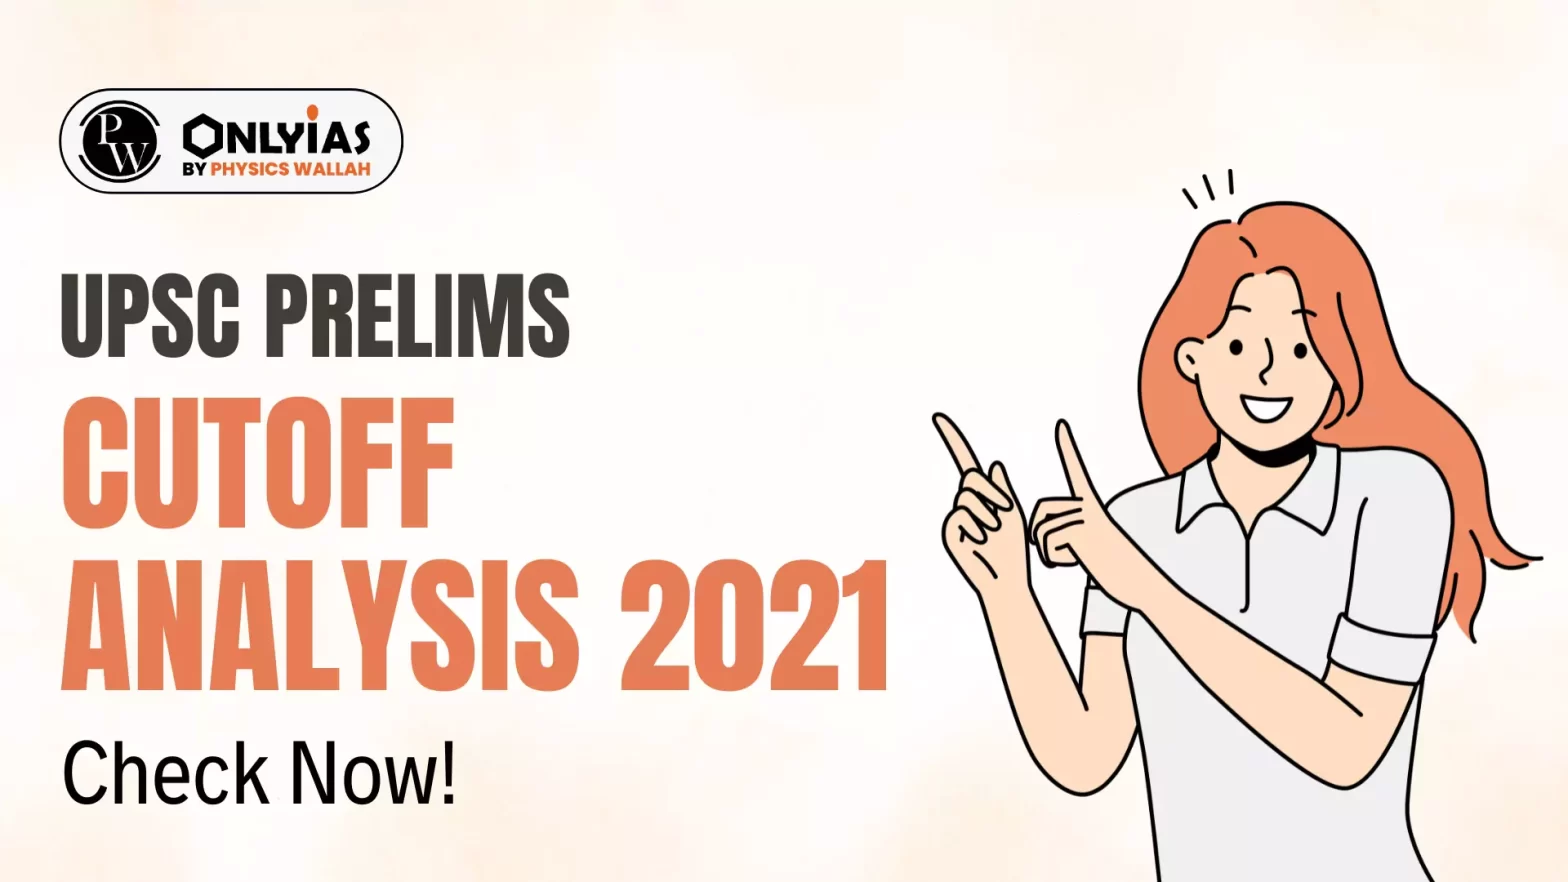 UPSC Prelims Cutoff Analysis 2021, Check Now!